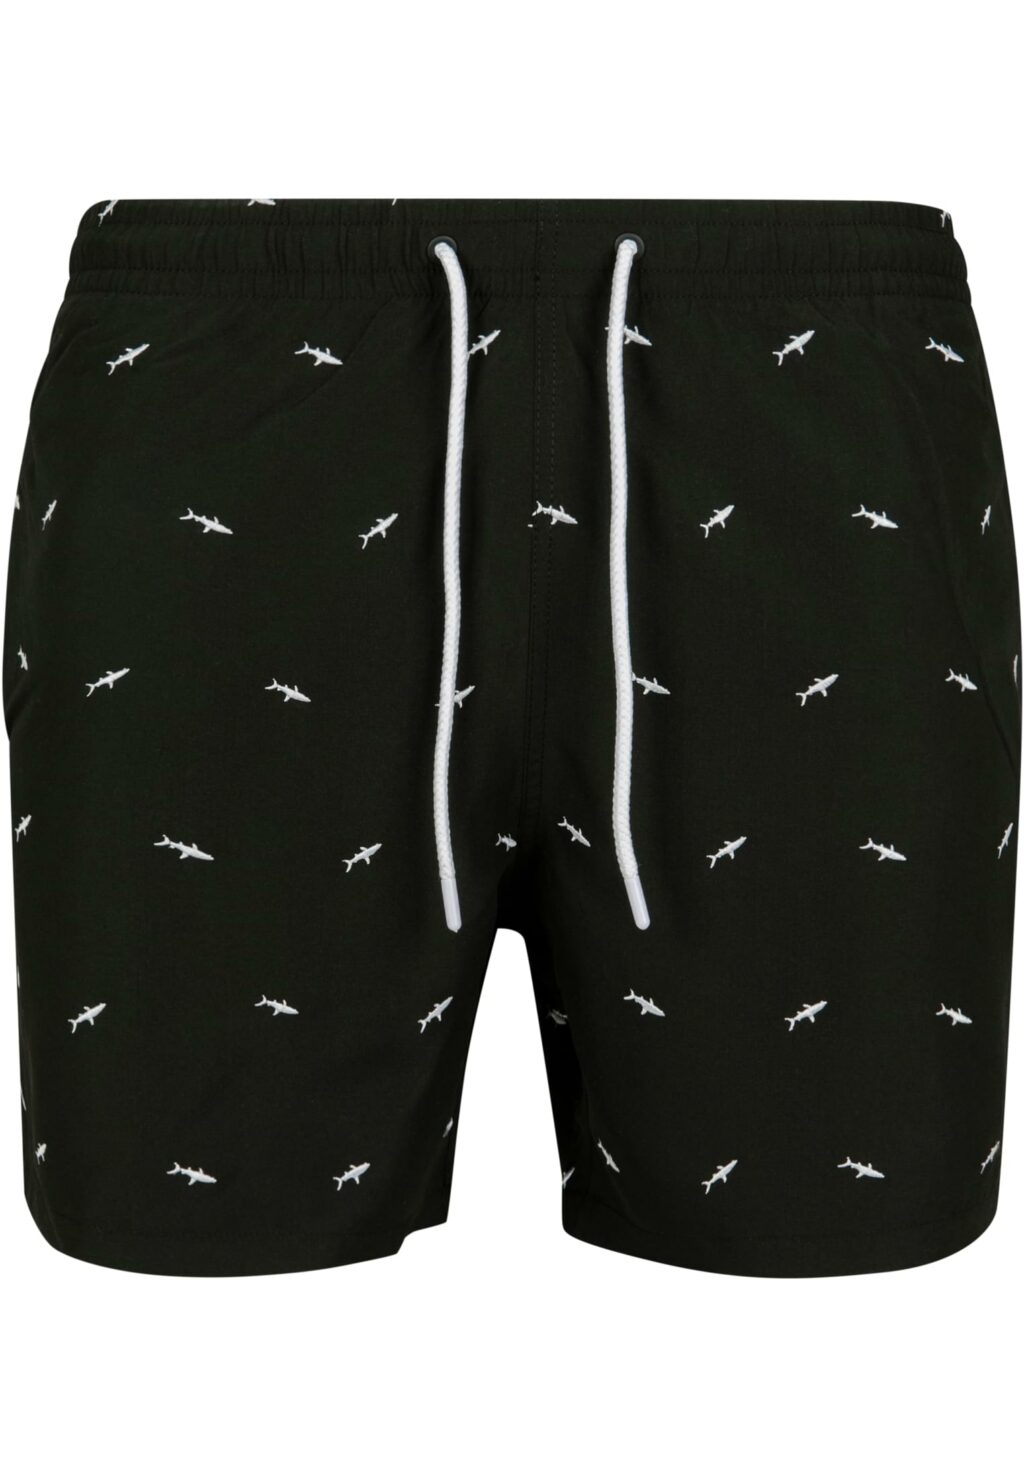 Urban Classics Embroidery Swim Shorts shark/black/white TB2680